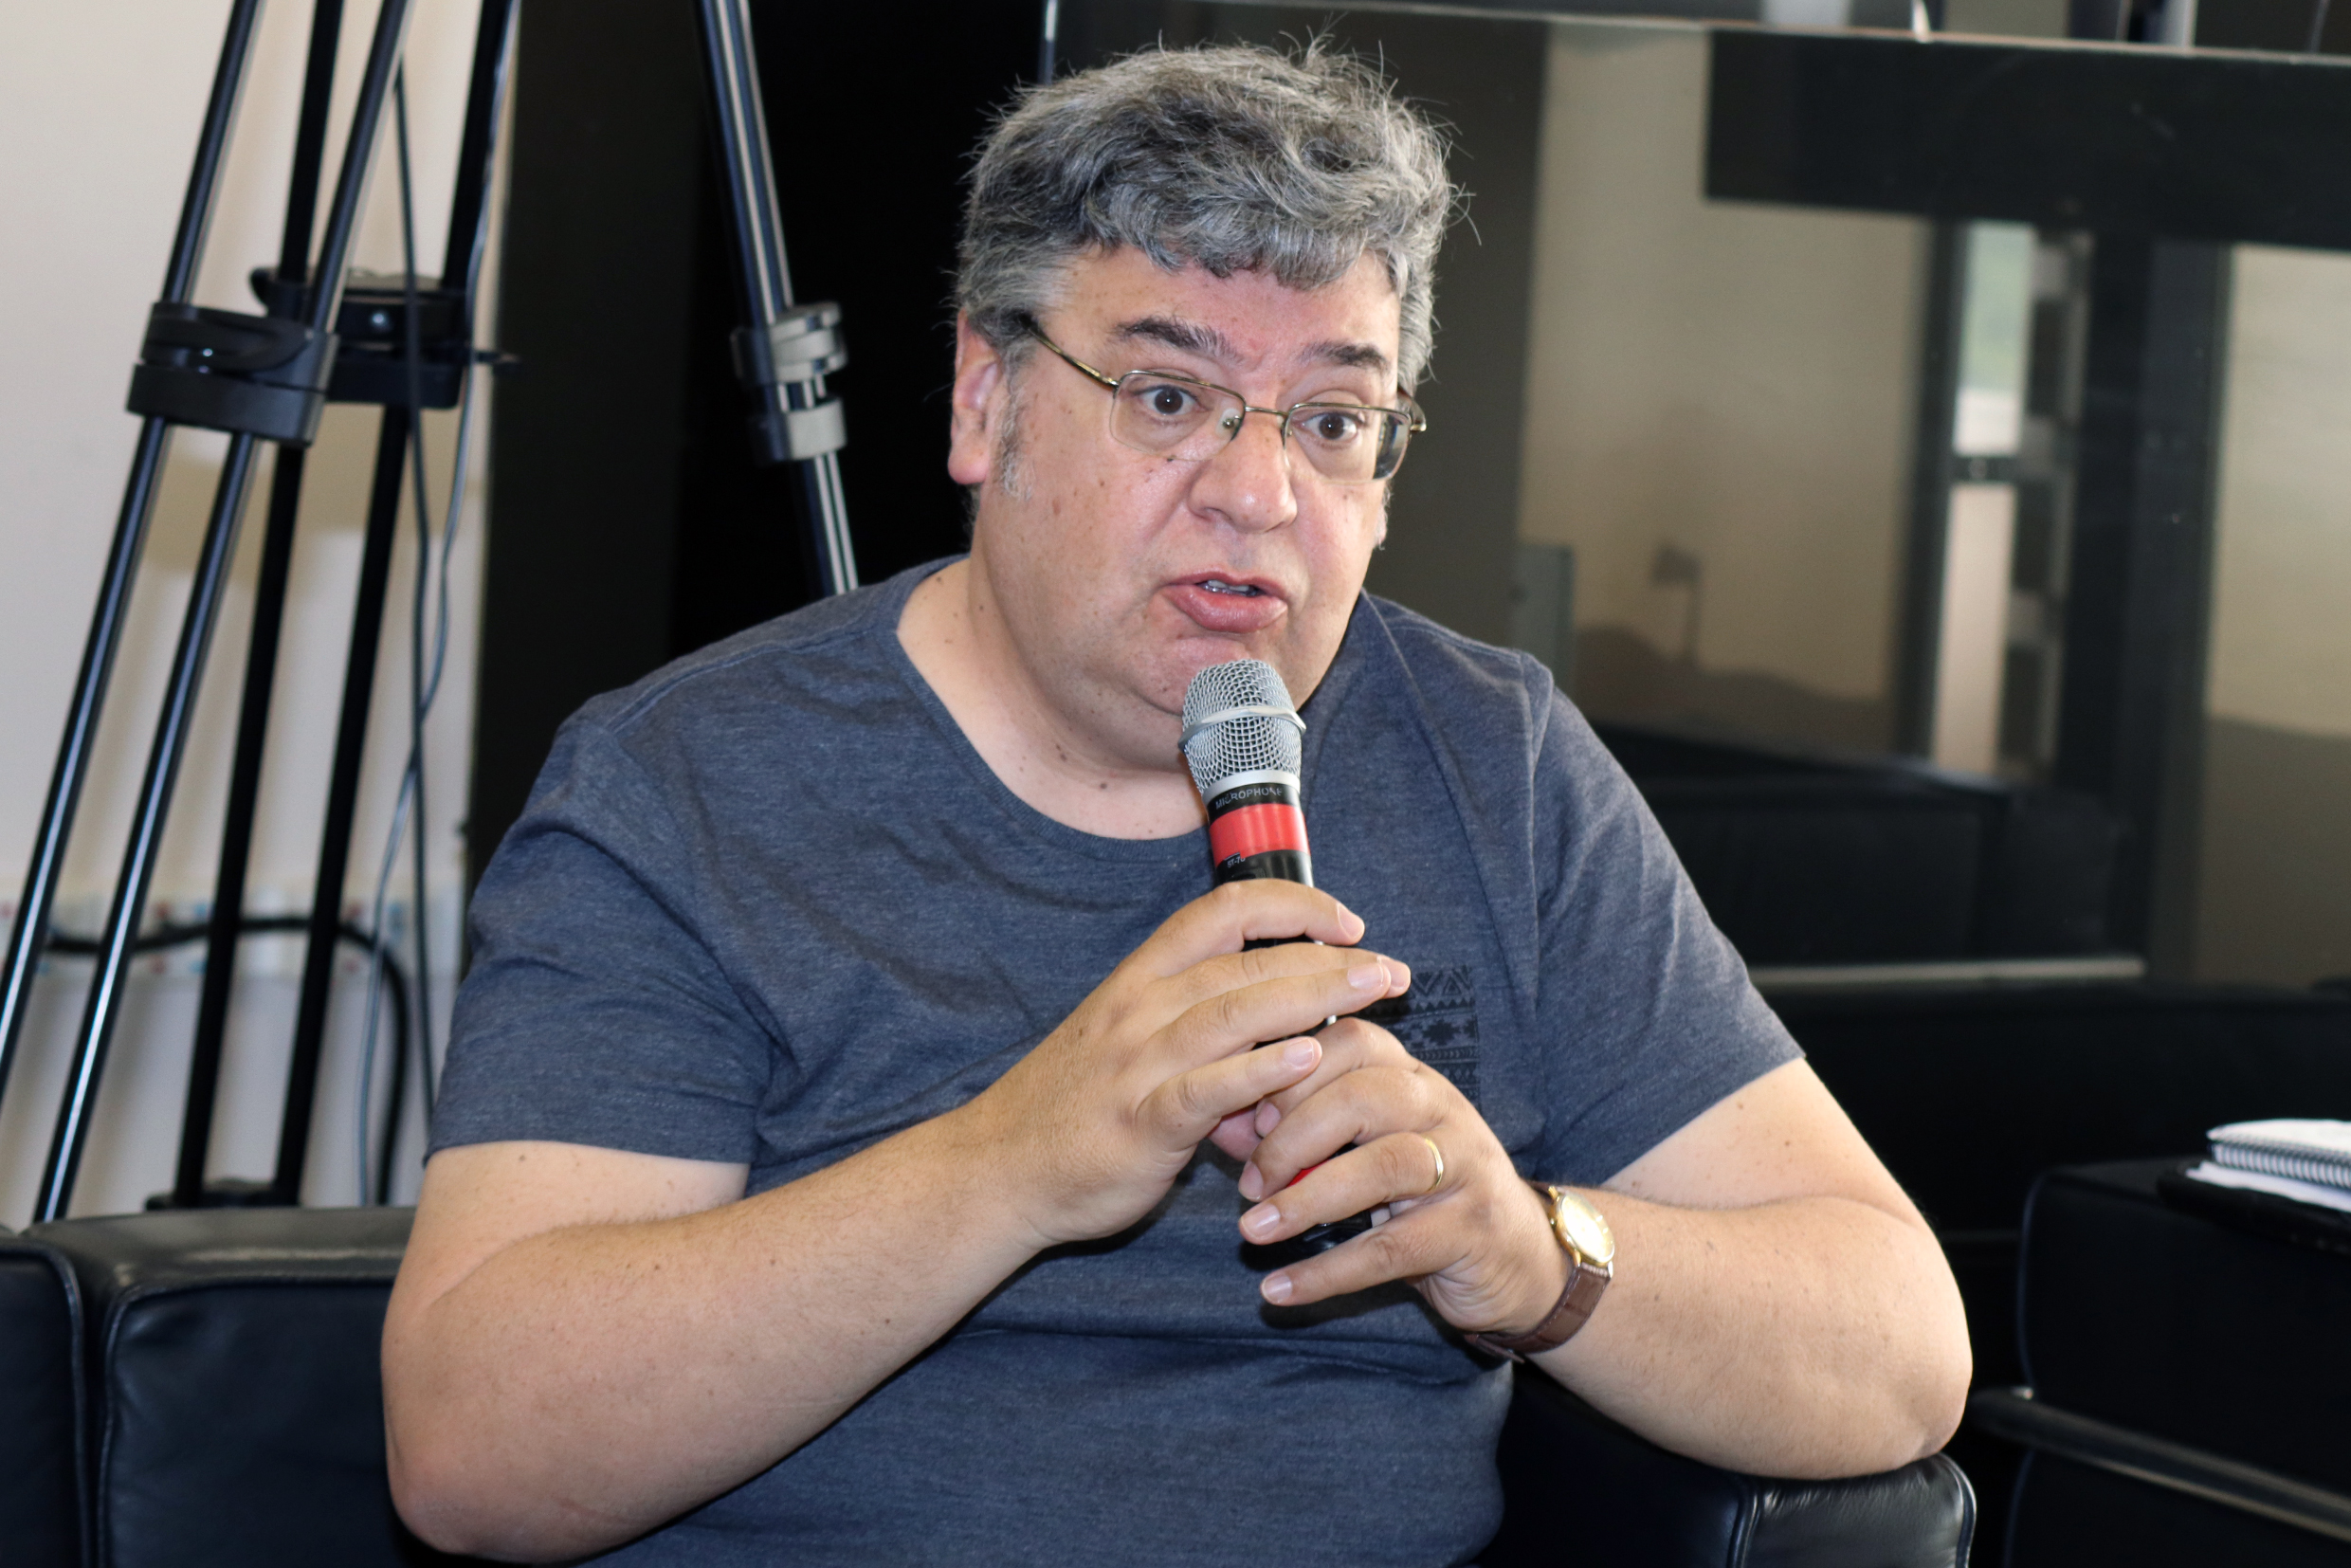 José Jonas Almeida fala durante o debate